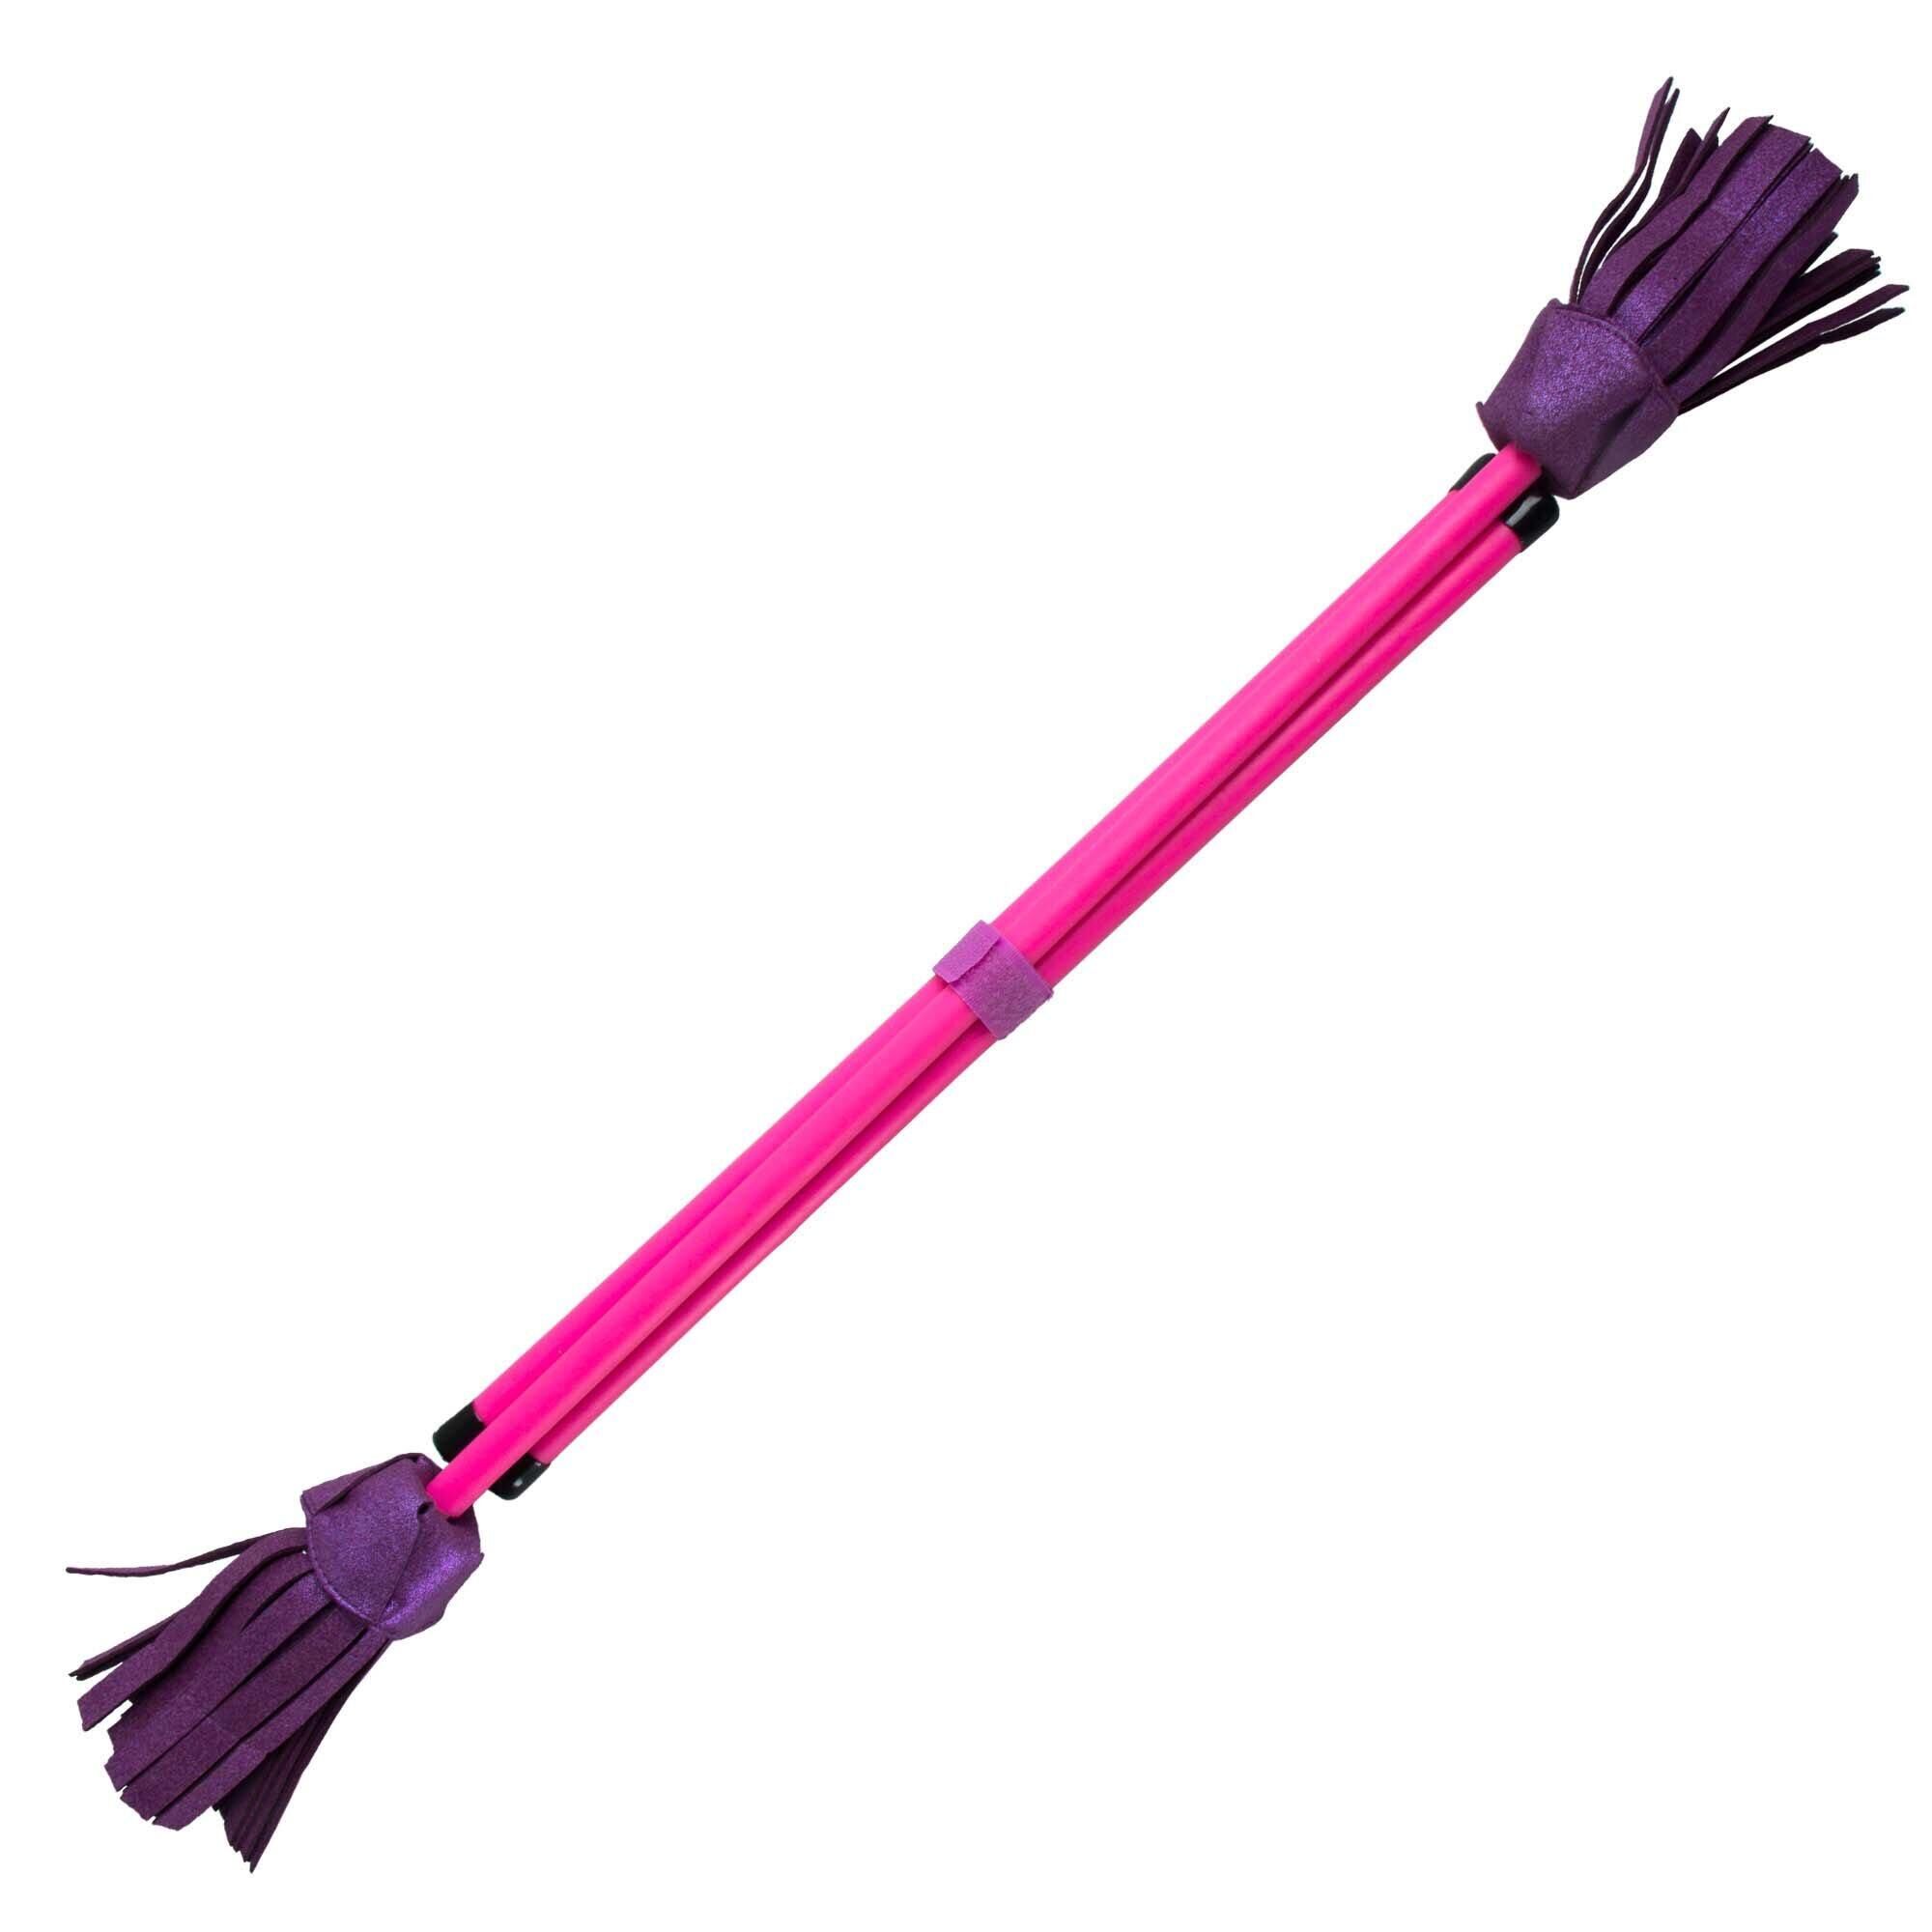 FIRETOYS Neo Fluoro Flower Stick and Hand Sticks-Pink with Purple Tassels